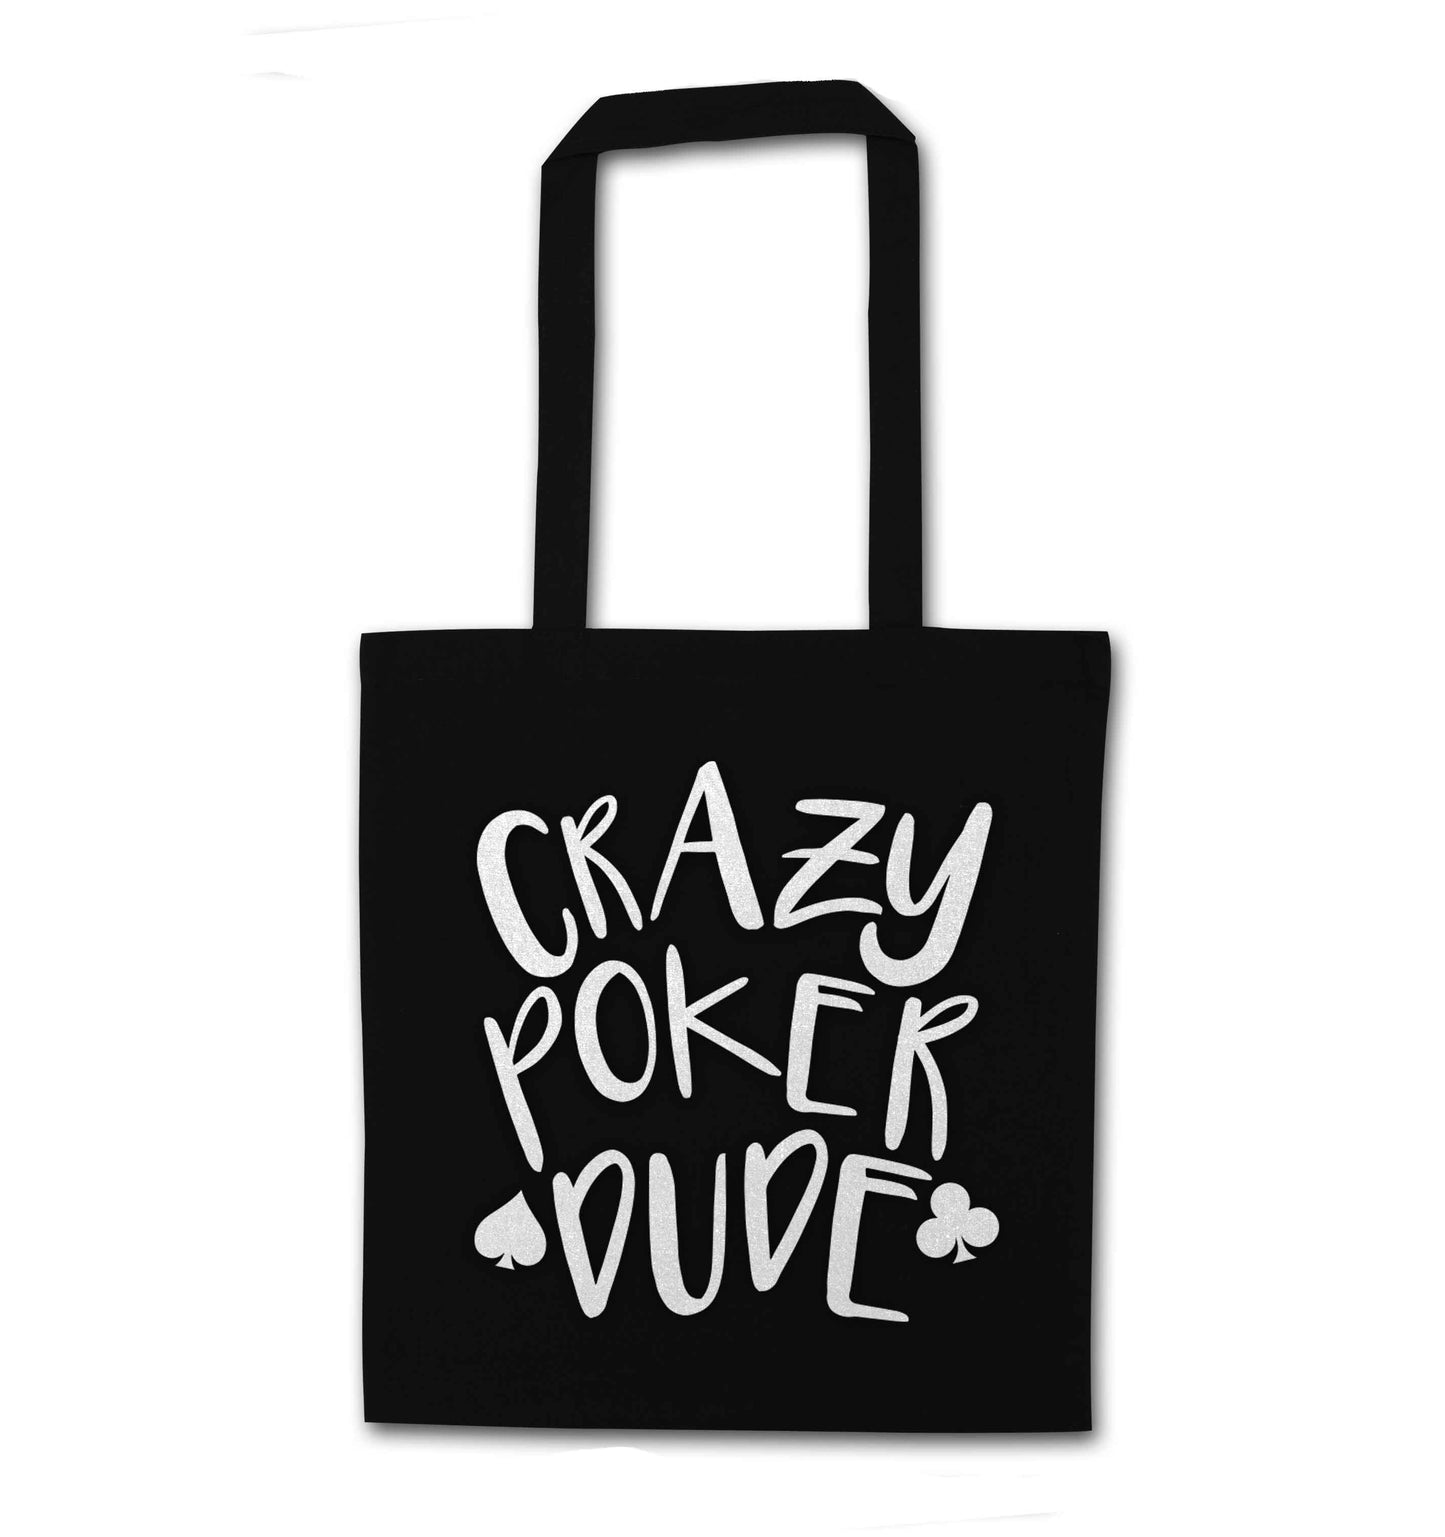 Crazy poker dude black tote bag